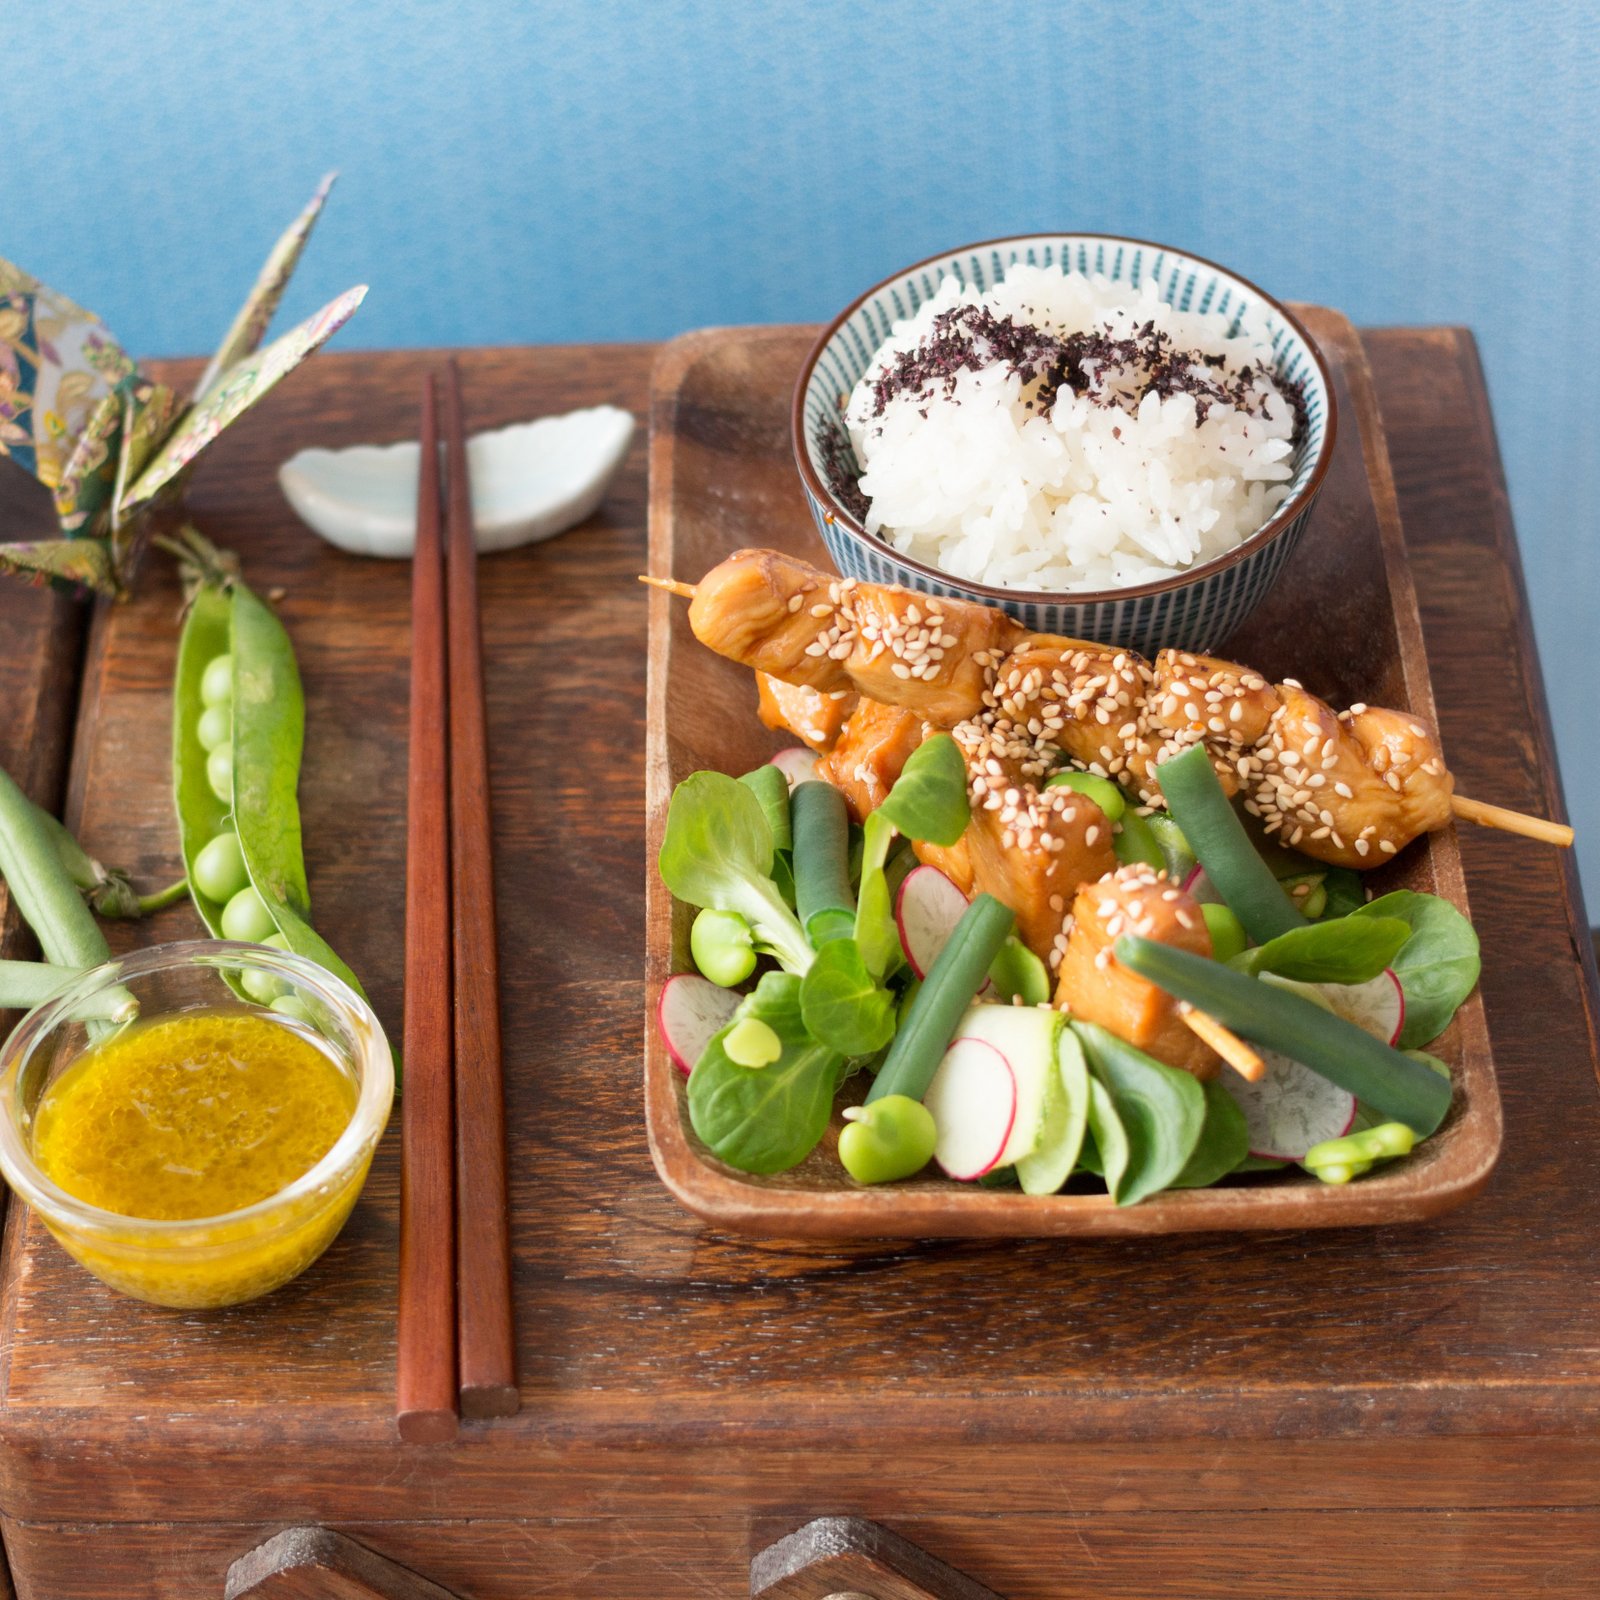 Moichef: Teriyaki chicken skewers and salad with a yuzu kosho vinaigrette